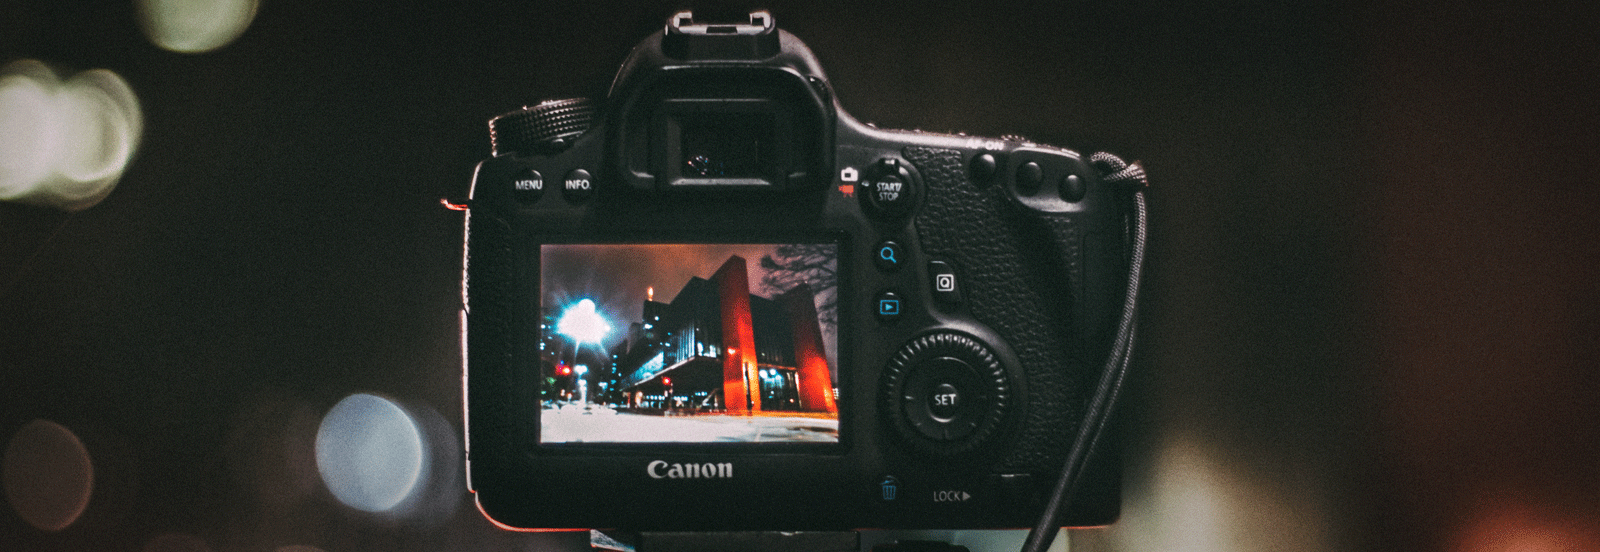 Canon DSLRs and cameras